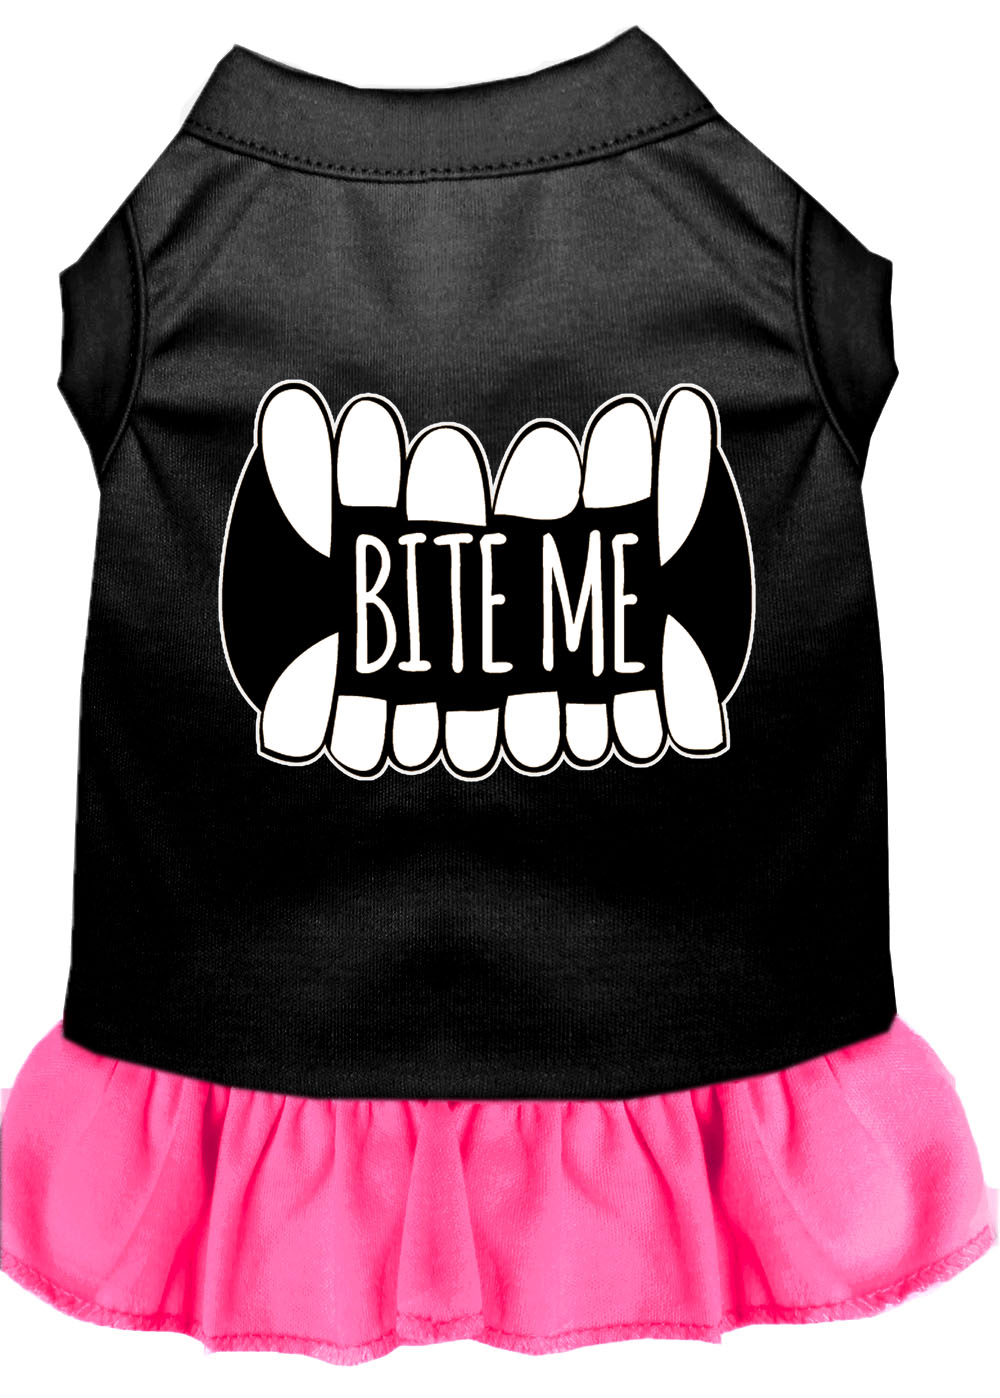 Bite Me Screen Print Dog Dress Black with Bright Pink Lg